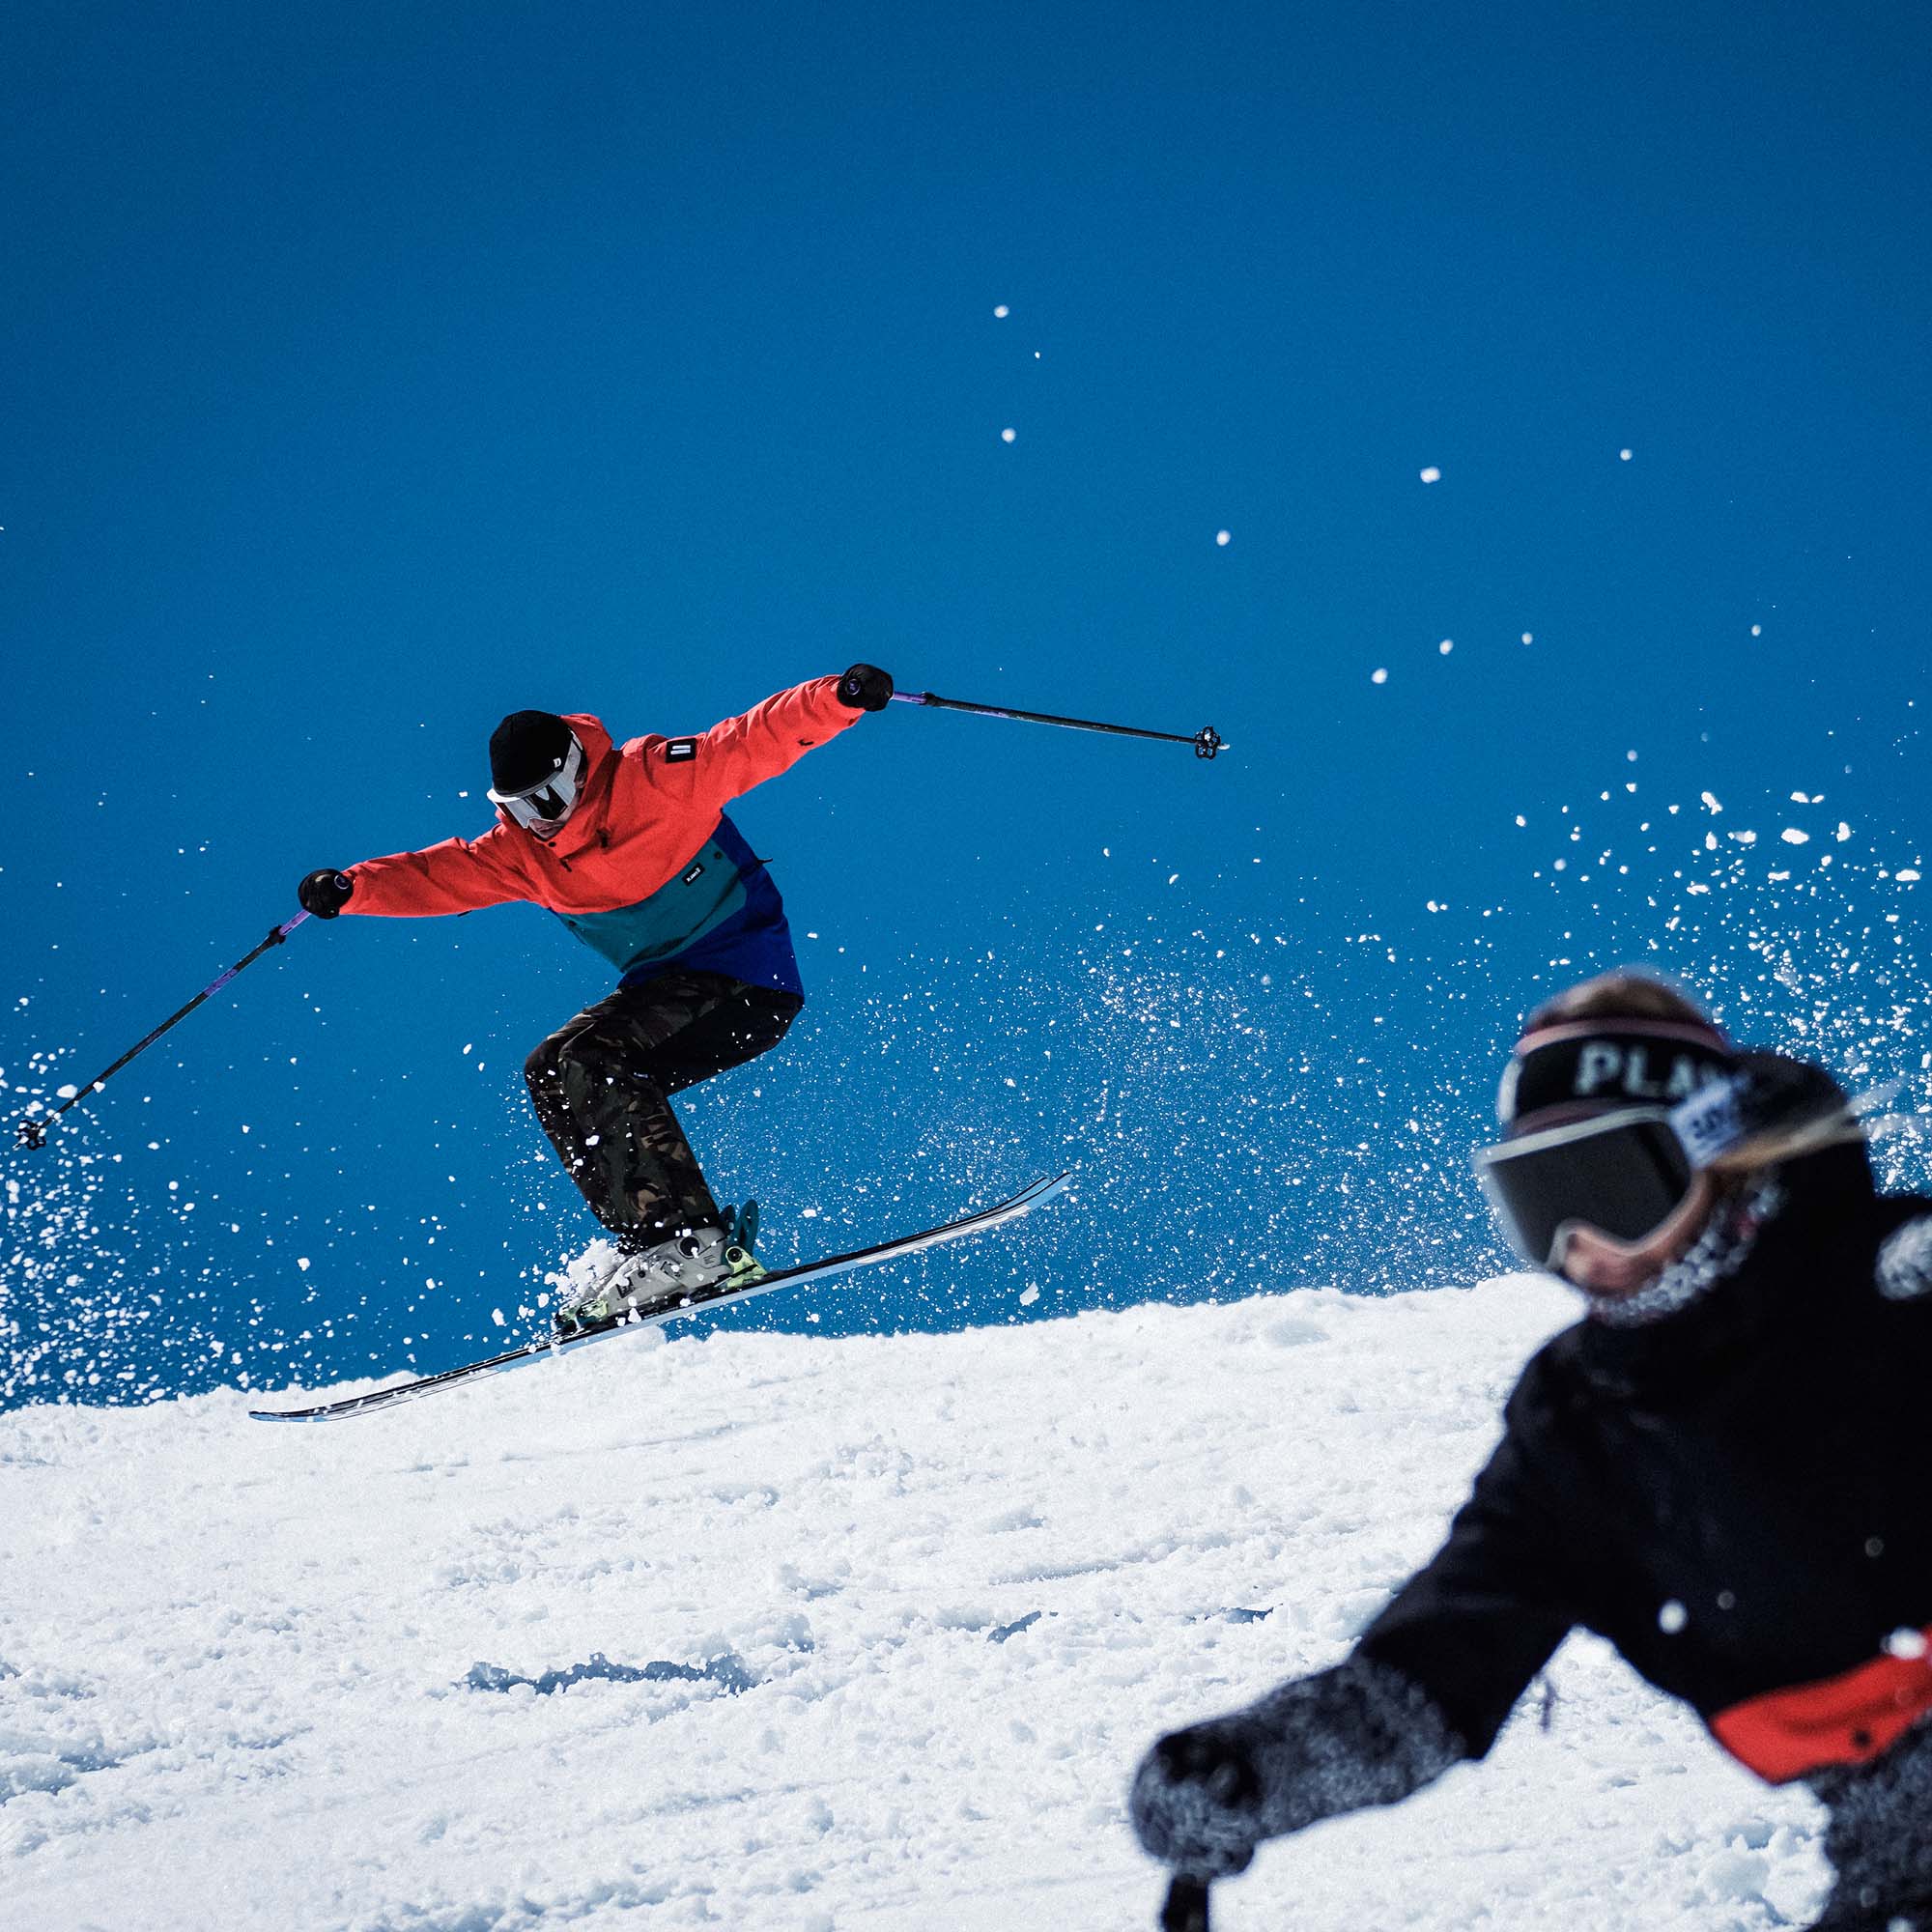 Planks Happy Days Anorak Shell Ski/Snowboard Jacket